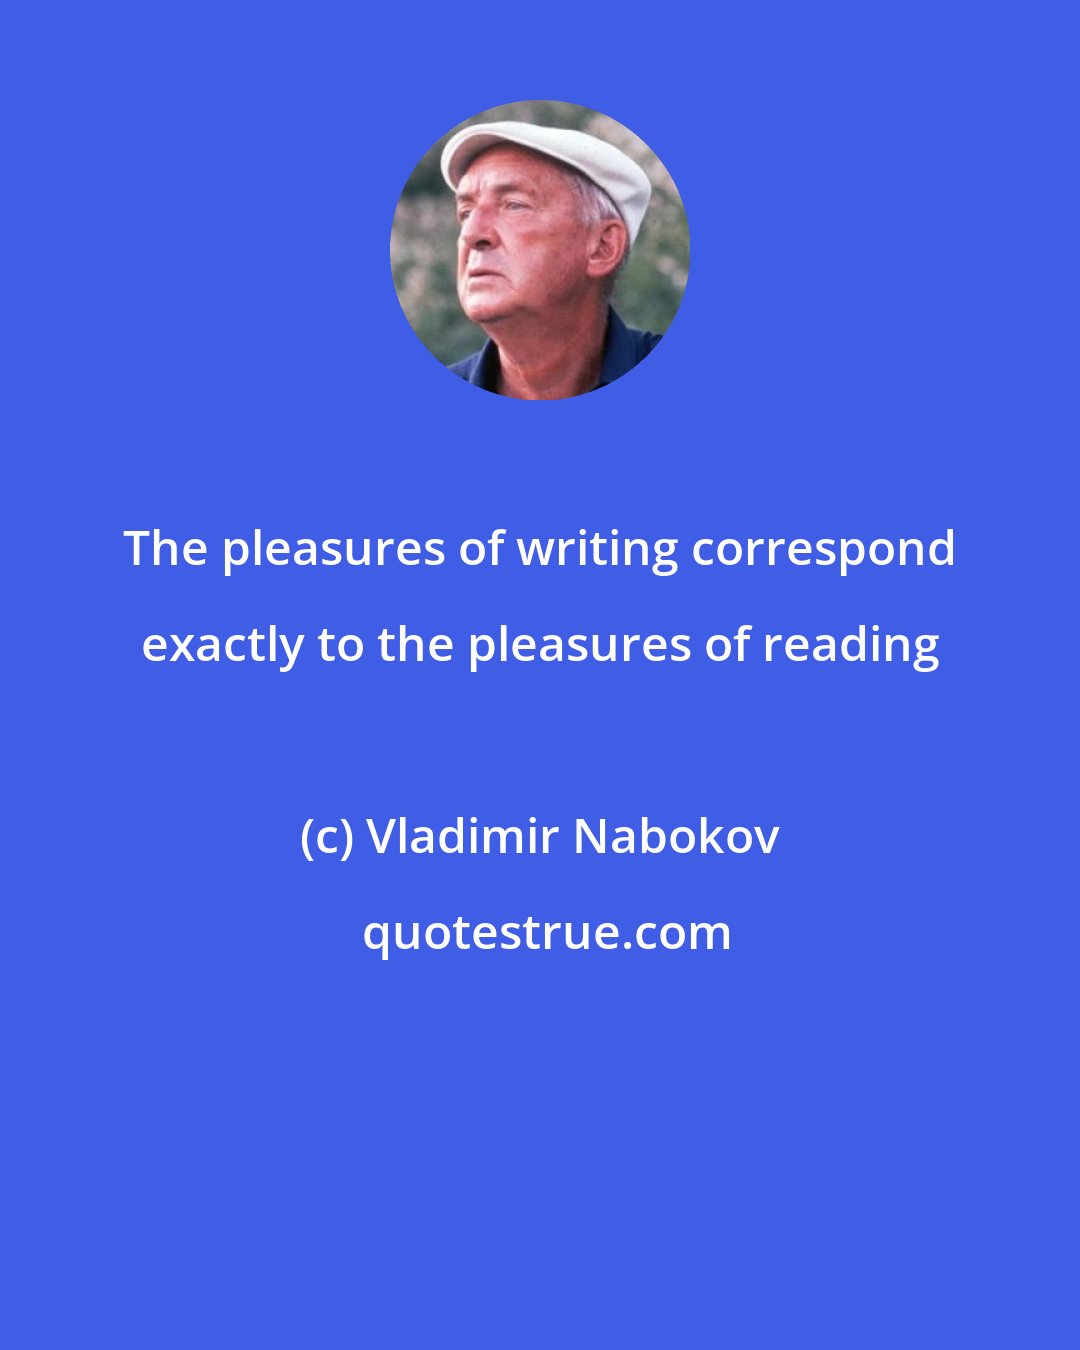 Vladimir Nabokov: The pleasures of writing correspond exactly to the pleasures of reading